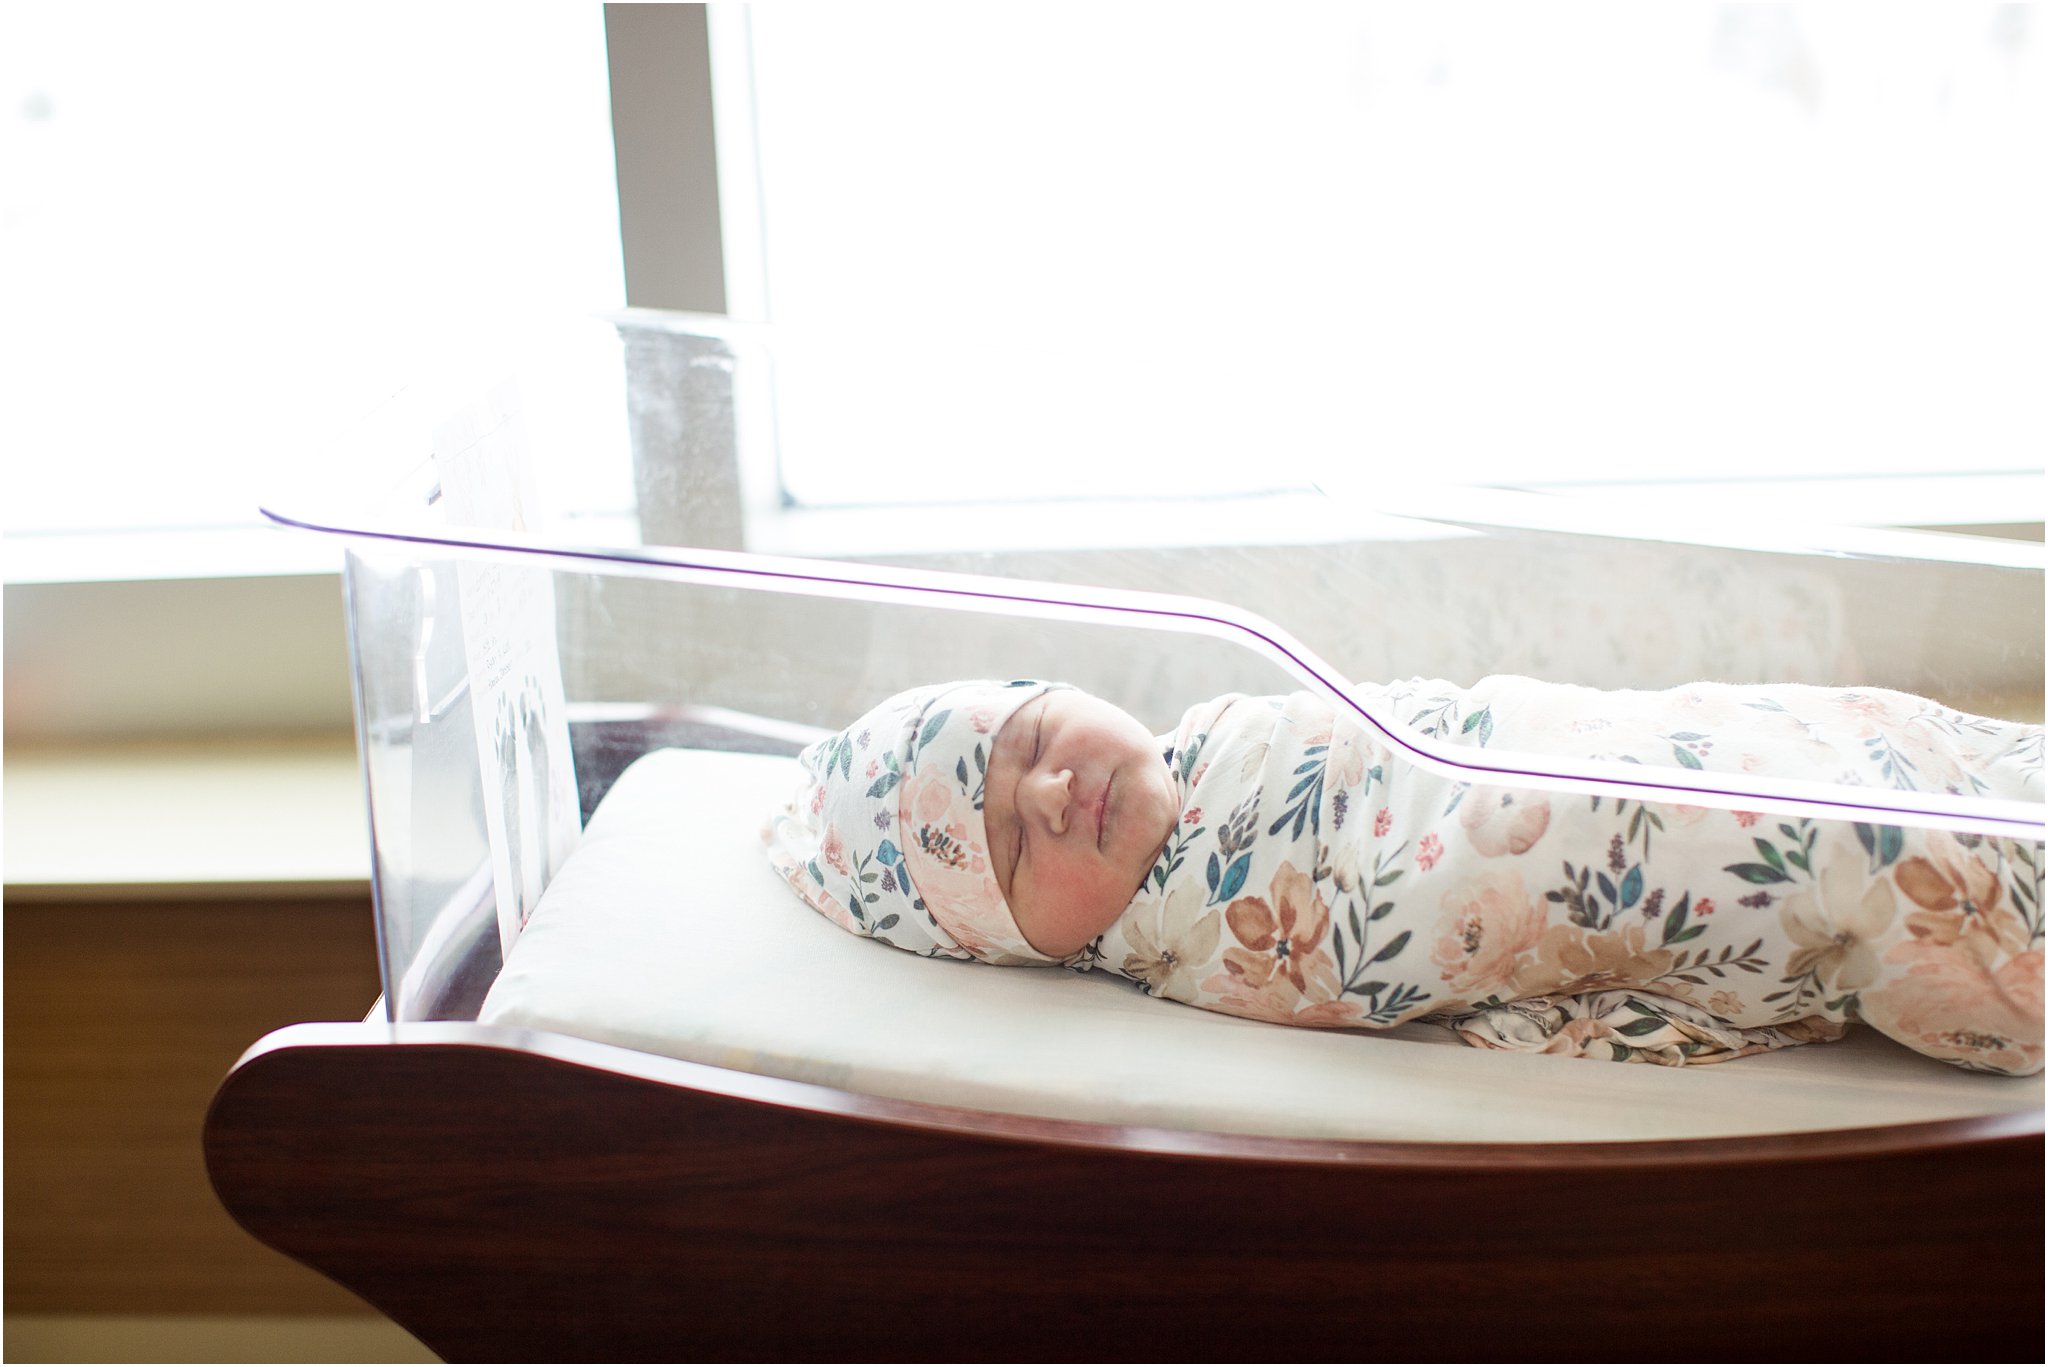 newborn girl in hospital bassinet by window